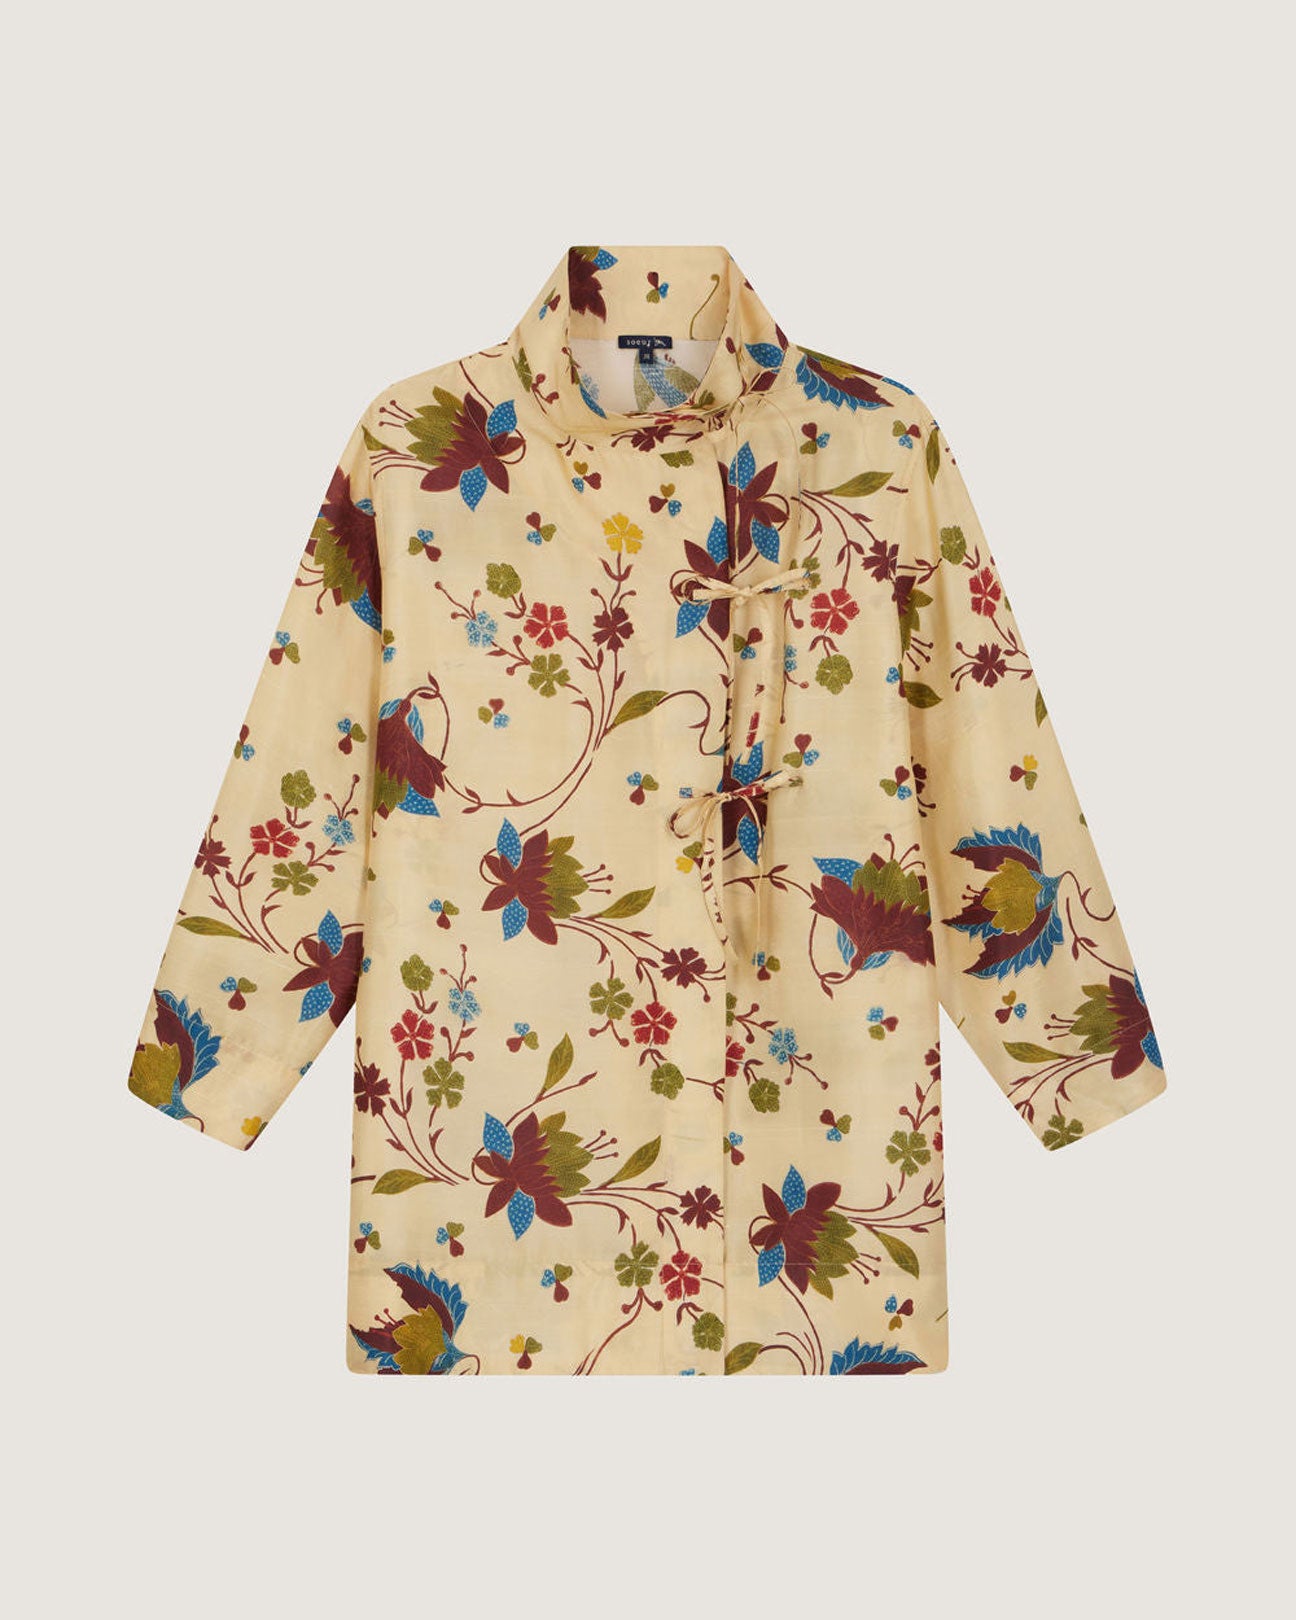 SOEUR Vervein Shirt in Ecru Multi Floral available at Lahn.shop